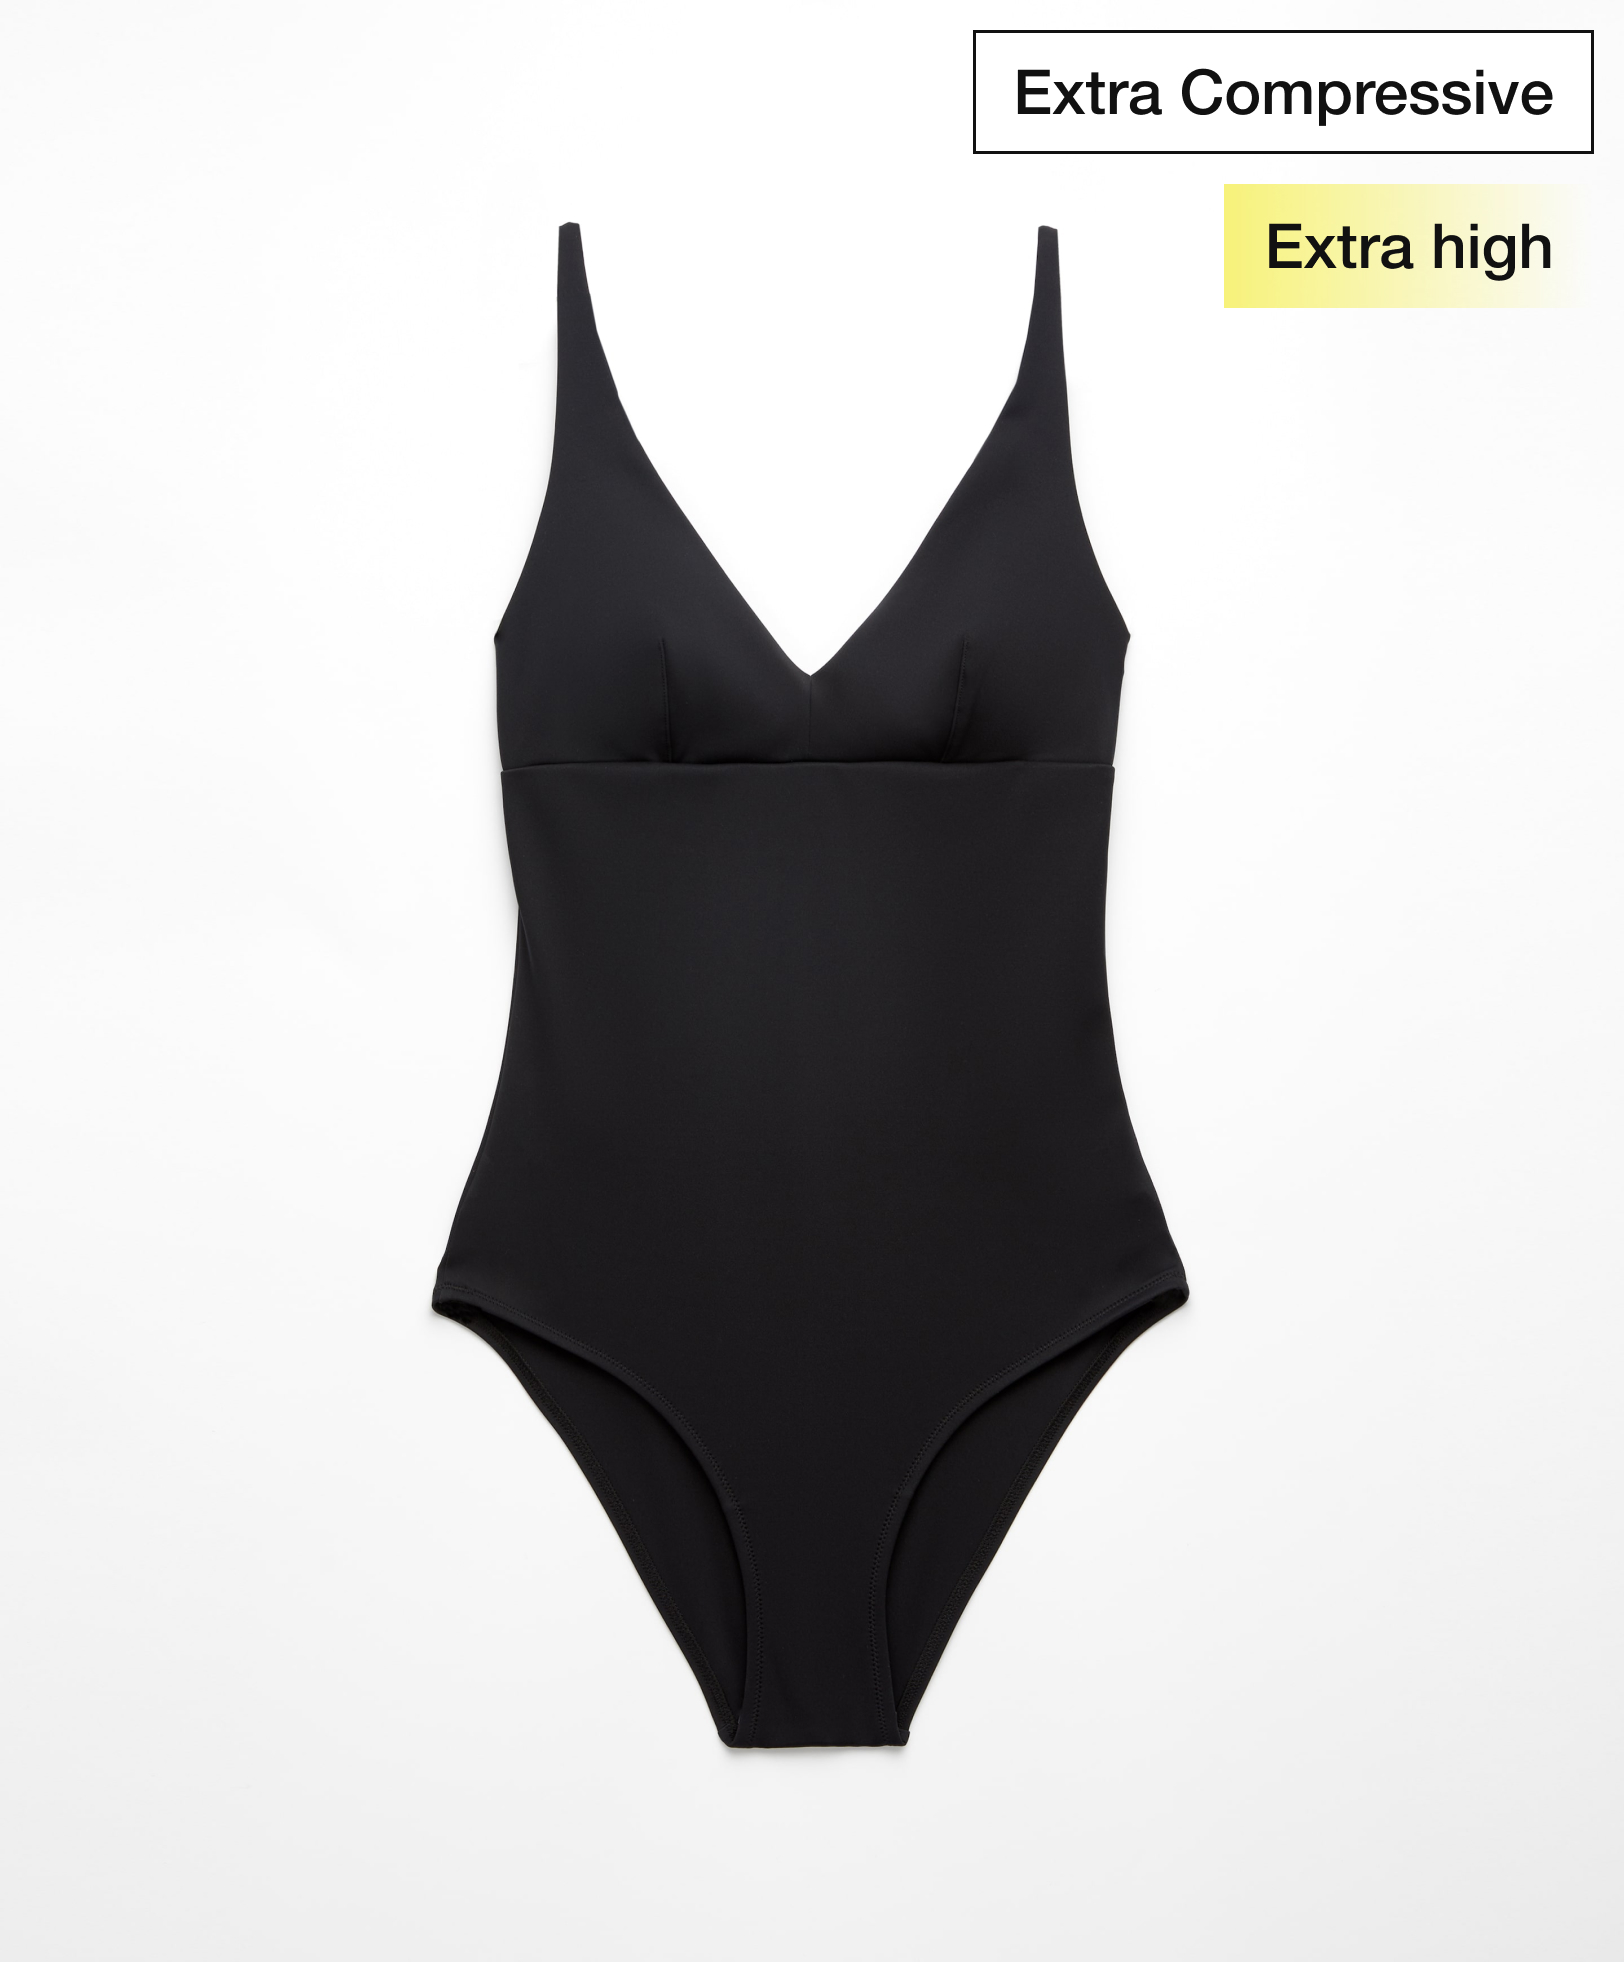 Extra Compressive triangle swimsuit